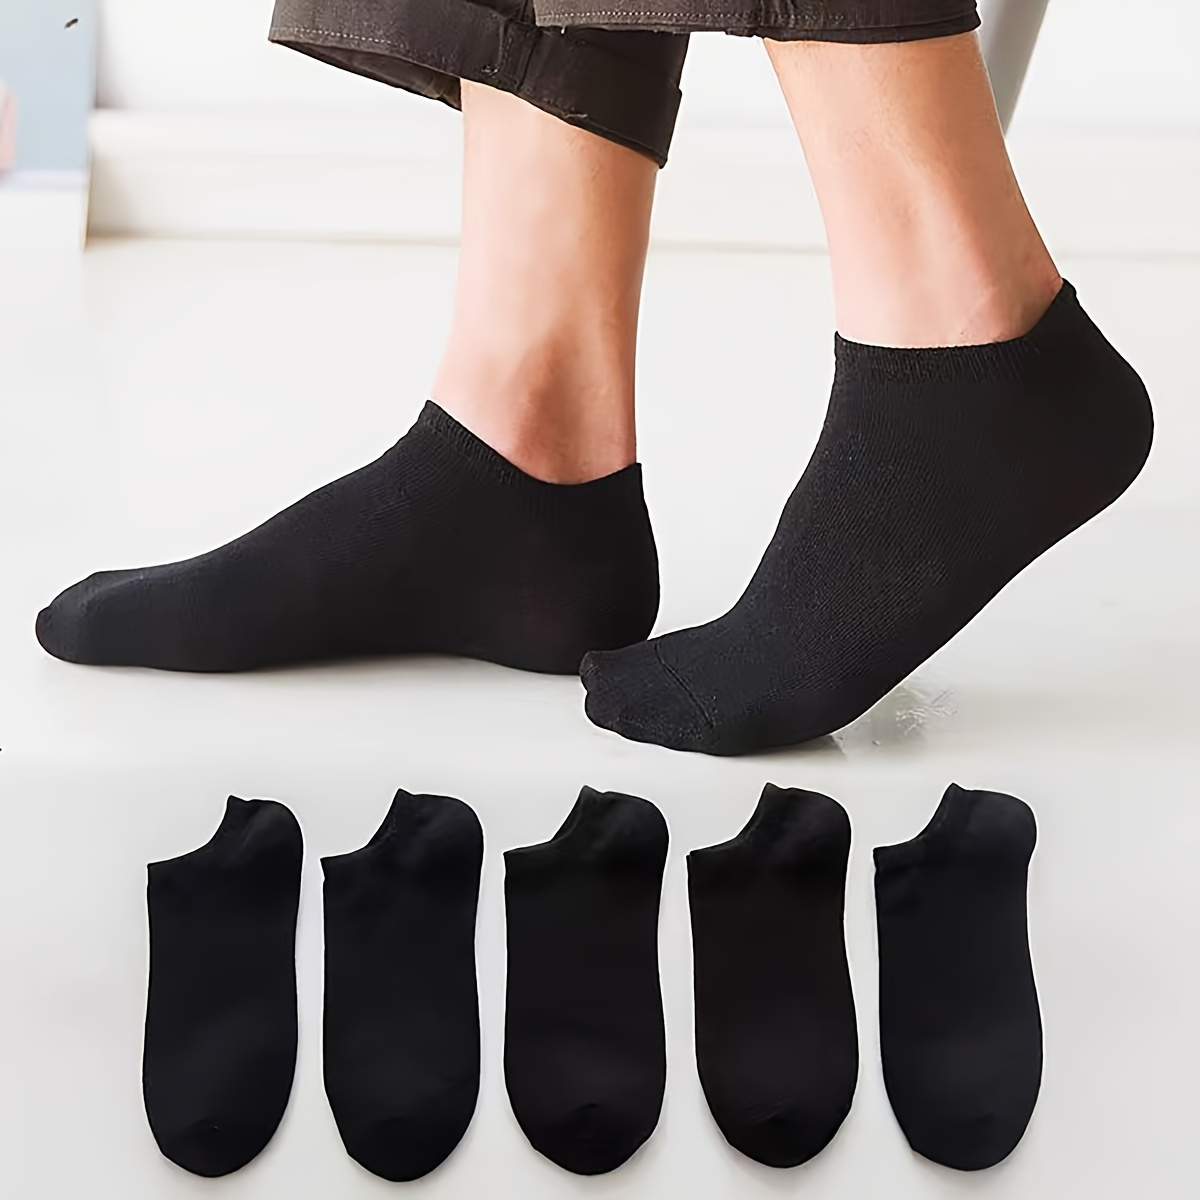 

5 Pairs Simple Solid Black Ankle Socks, Comfy & Breathable Short Socks, Women's Stockings & Hosiery